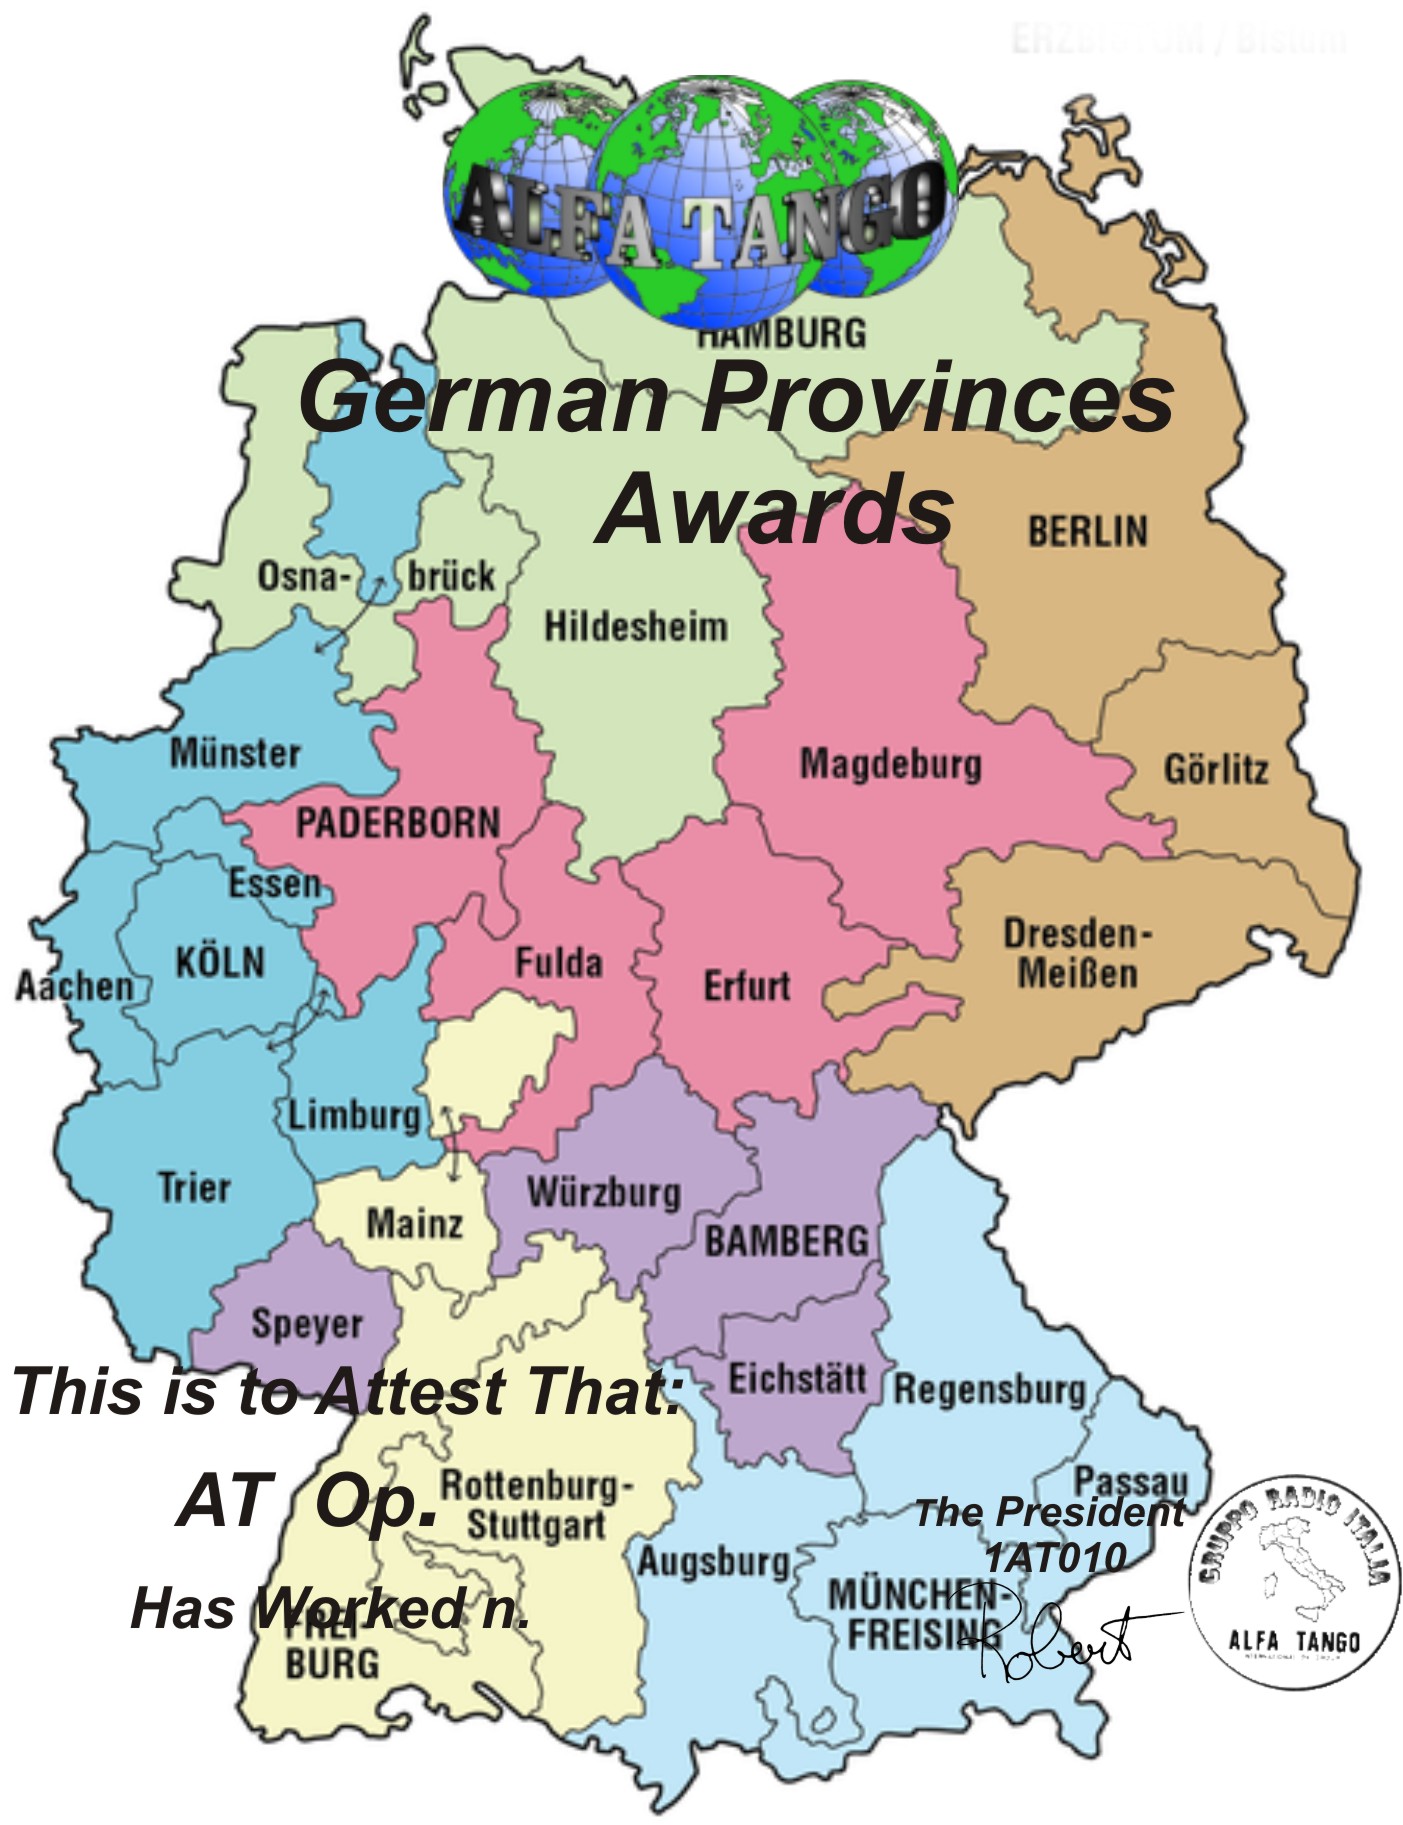 56_German_Provinces_Award.jpg